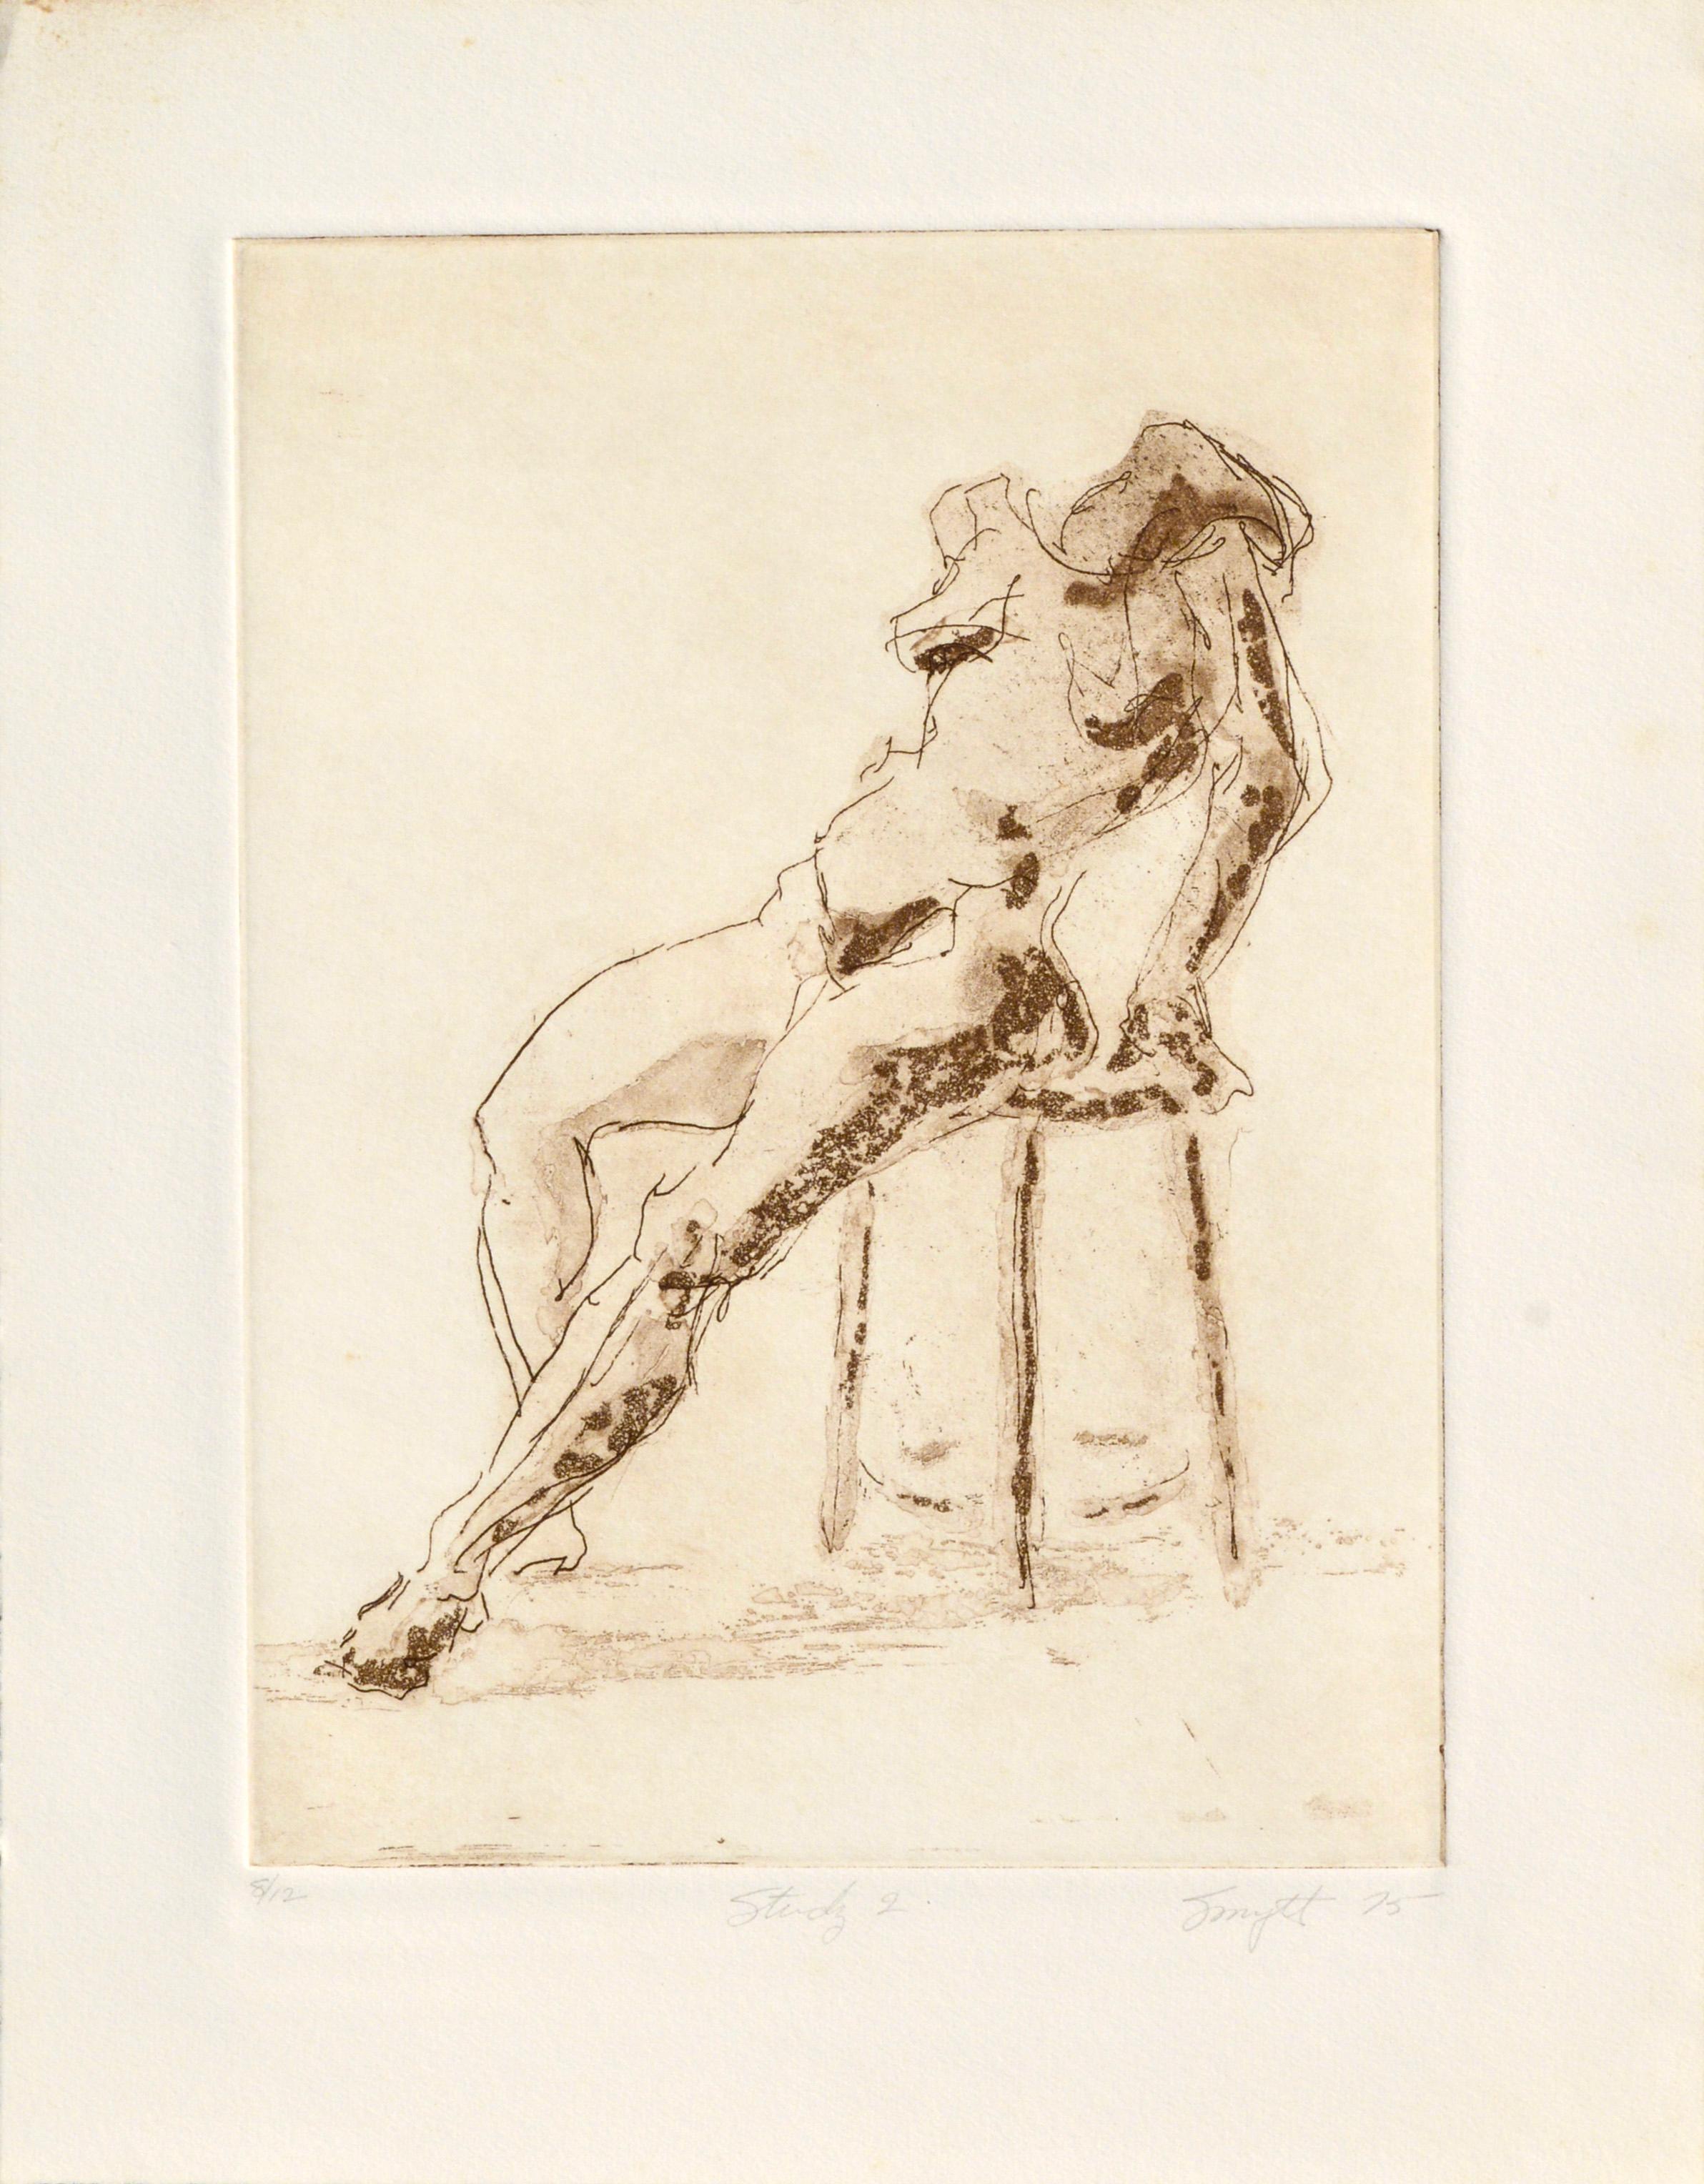 Jim Smyth Nude Print - "Study 2", Seated Figure Lithograph